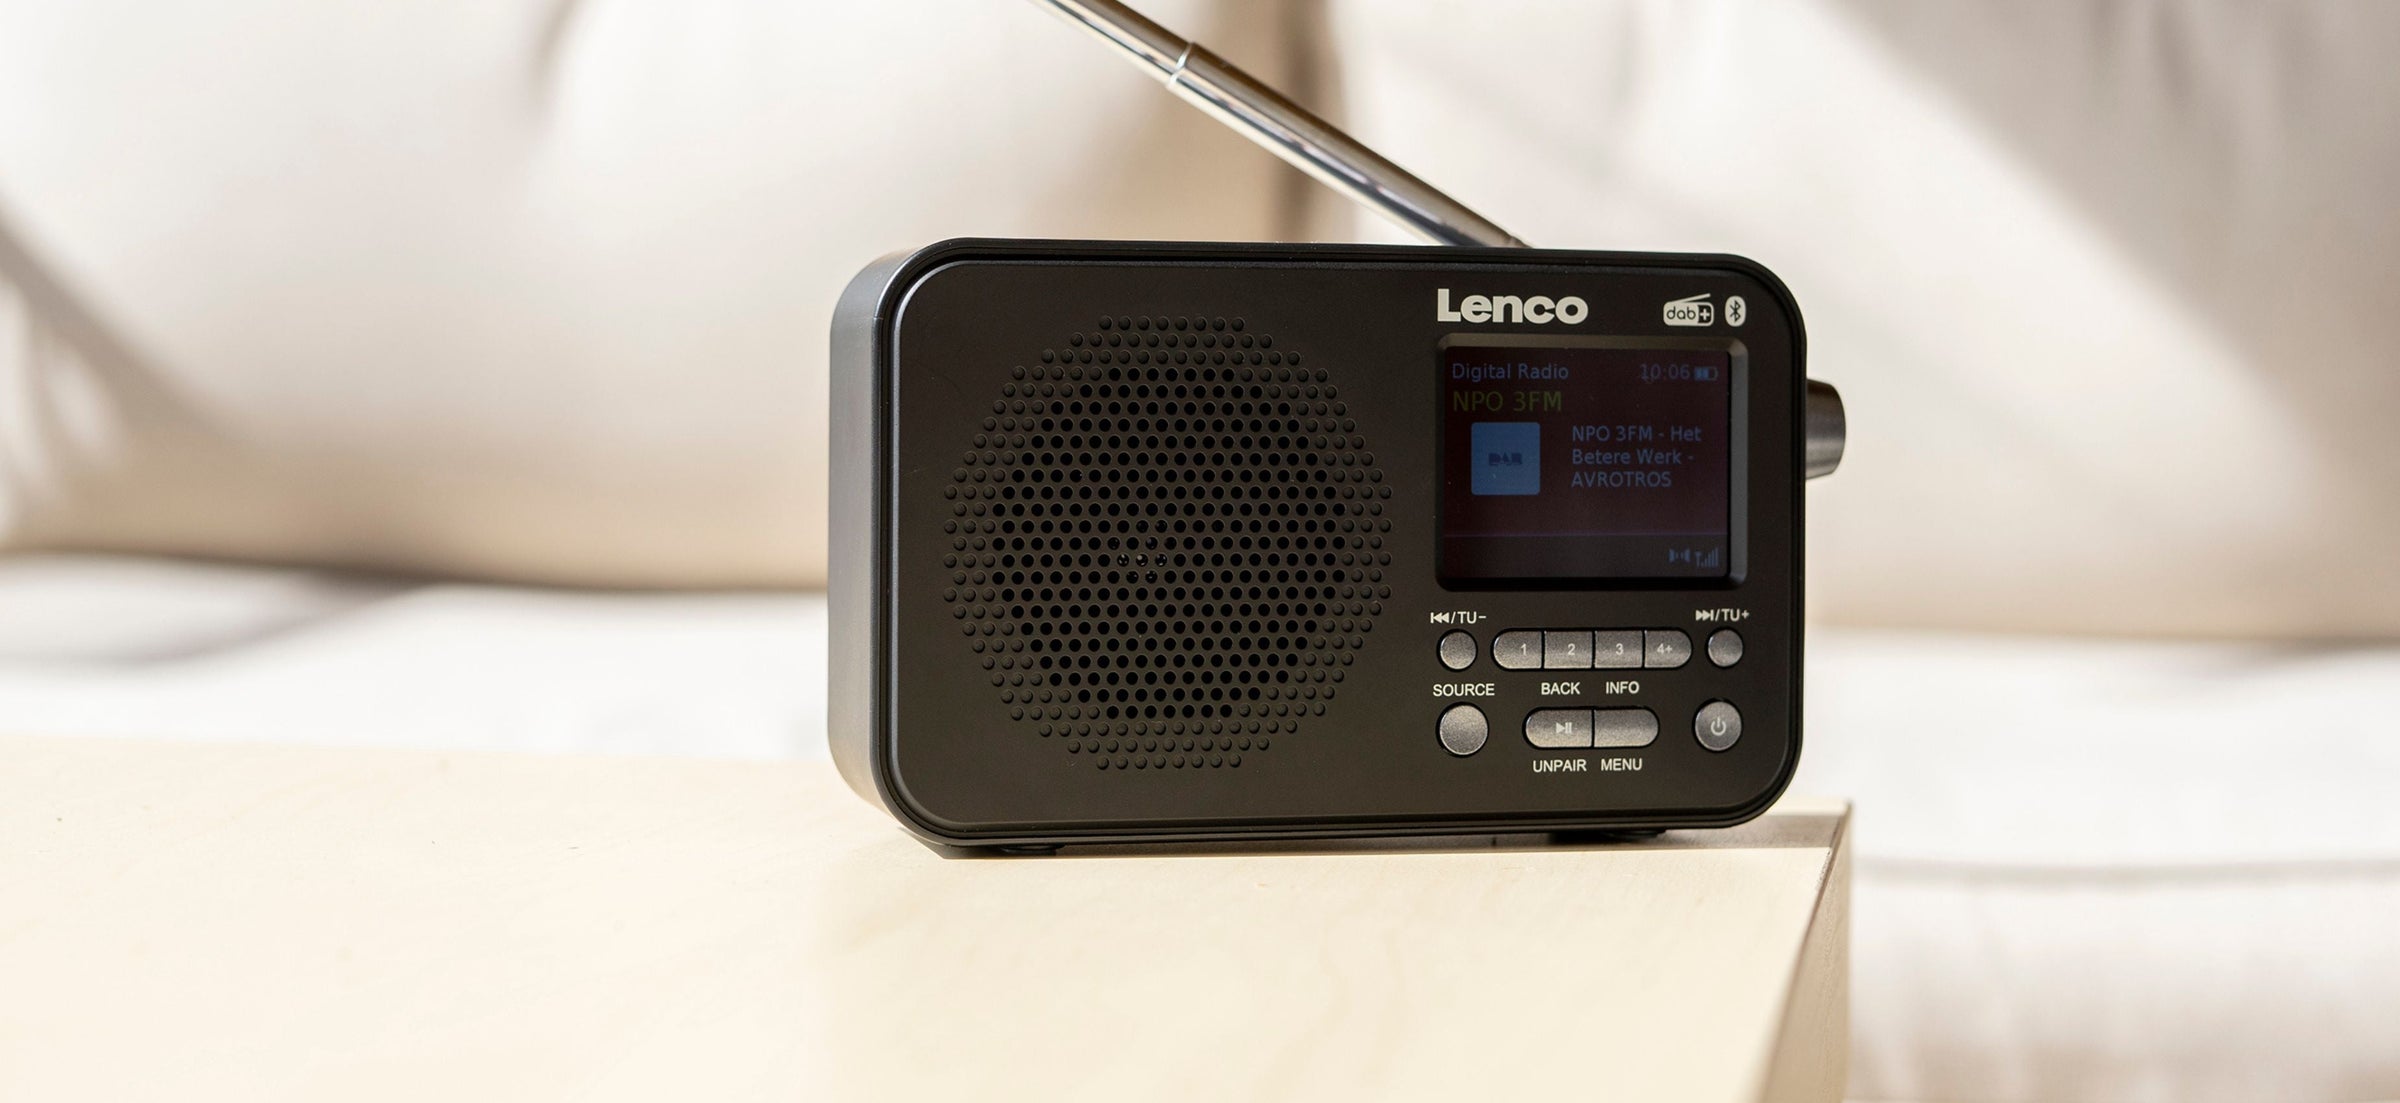 Lenco Bluetooth radios | in Lenco the Official Now Shop